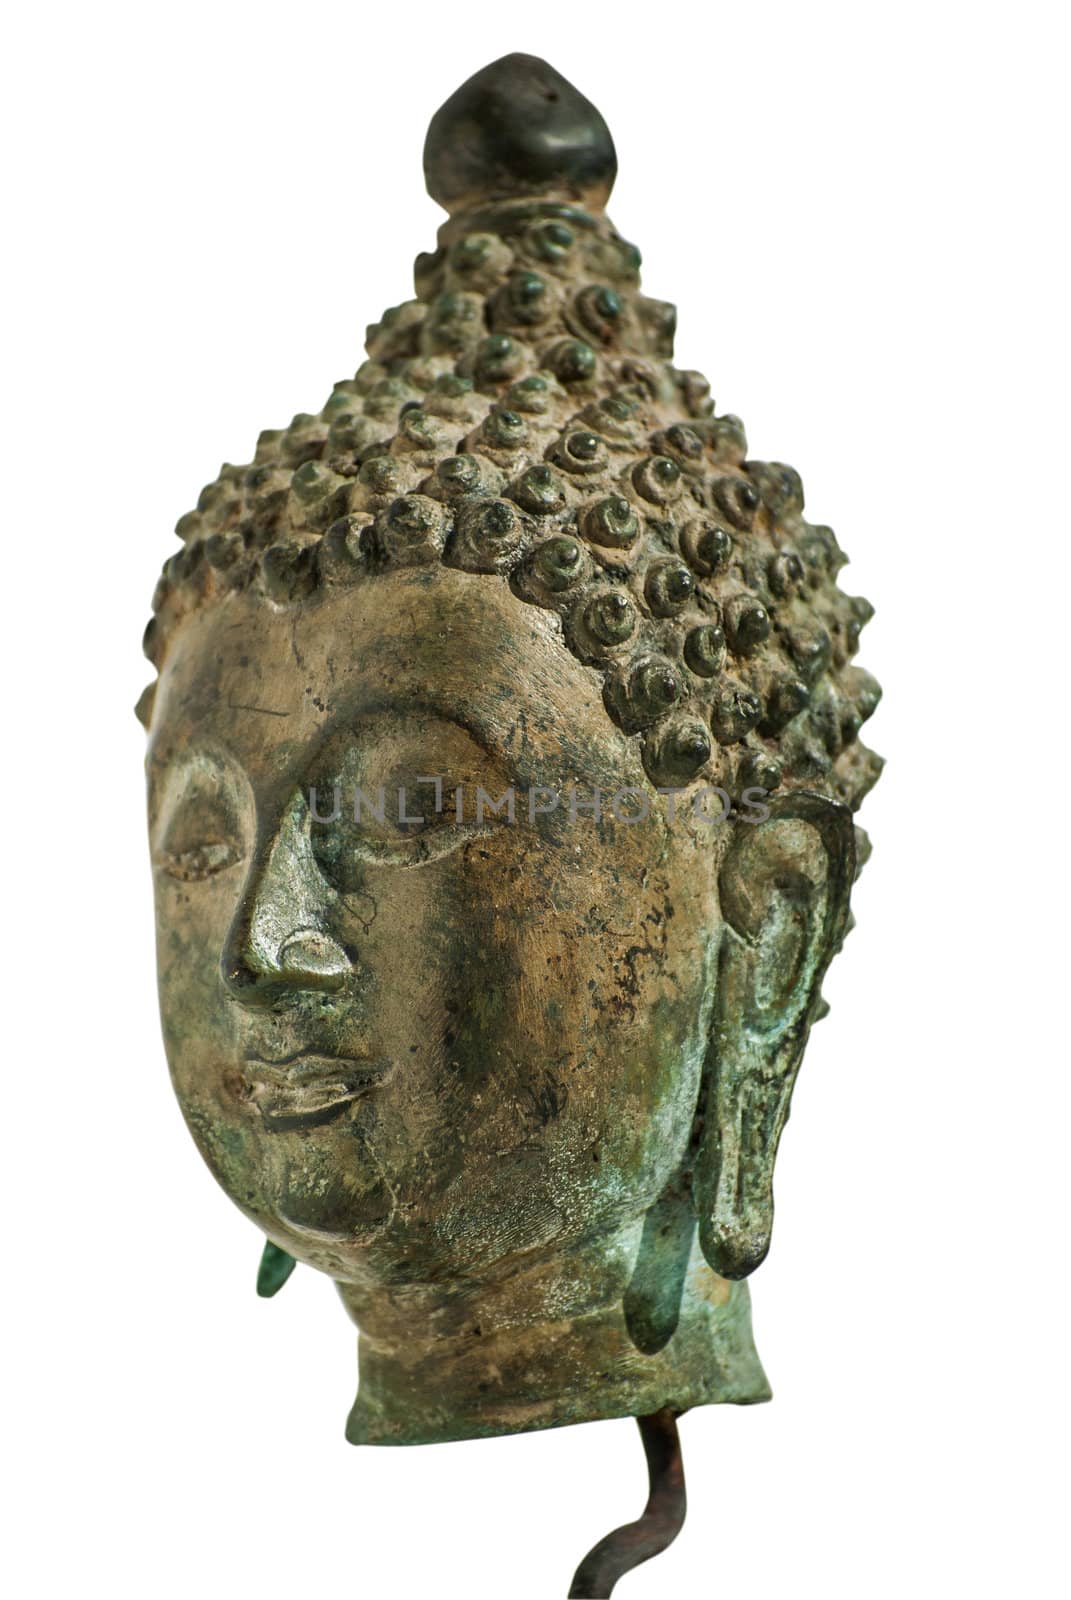 Buddha bronze head closeup isolated on white background